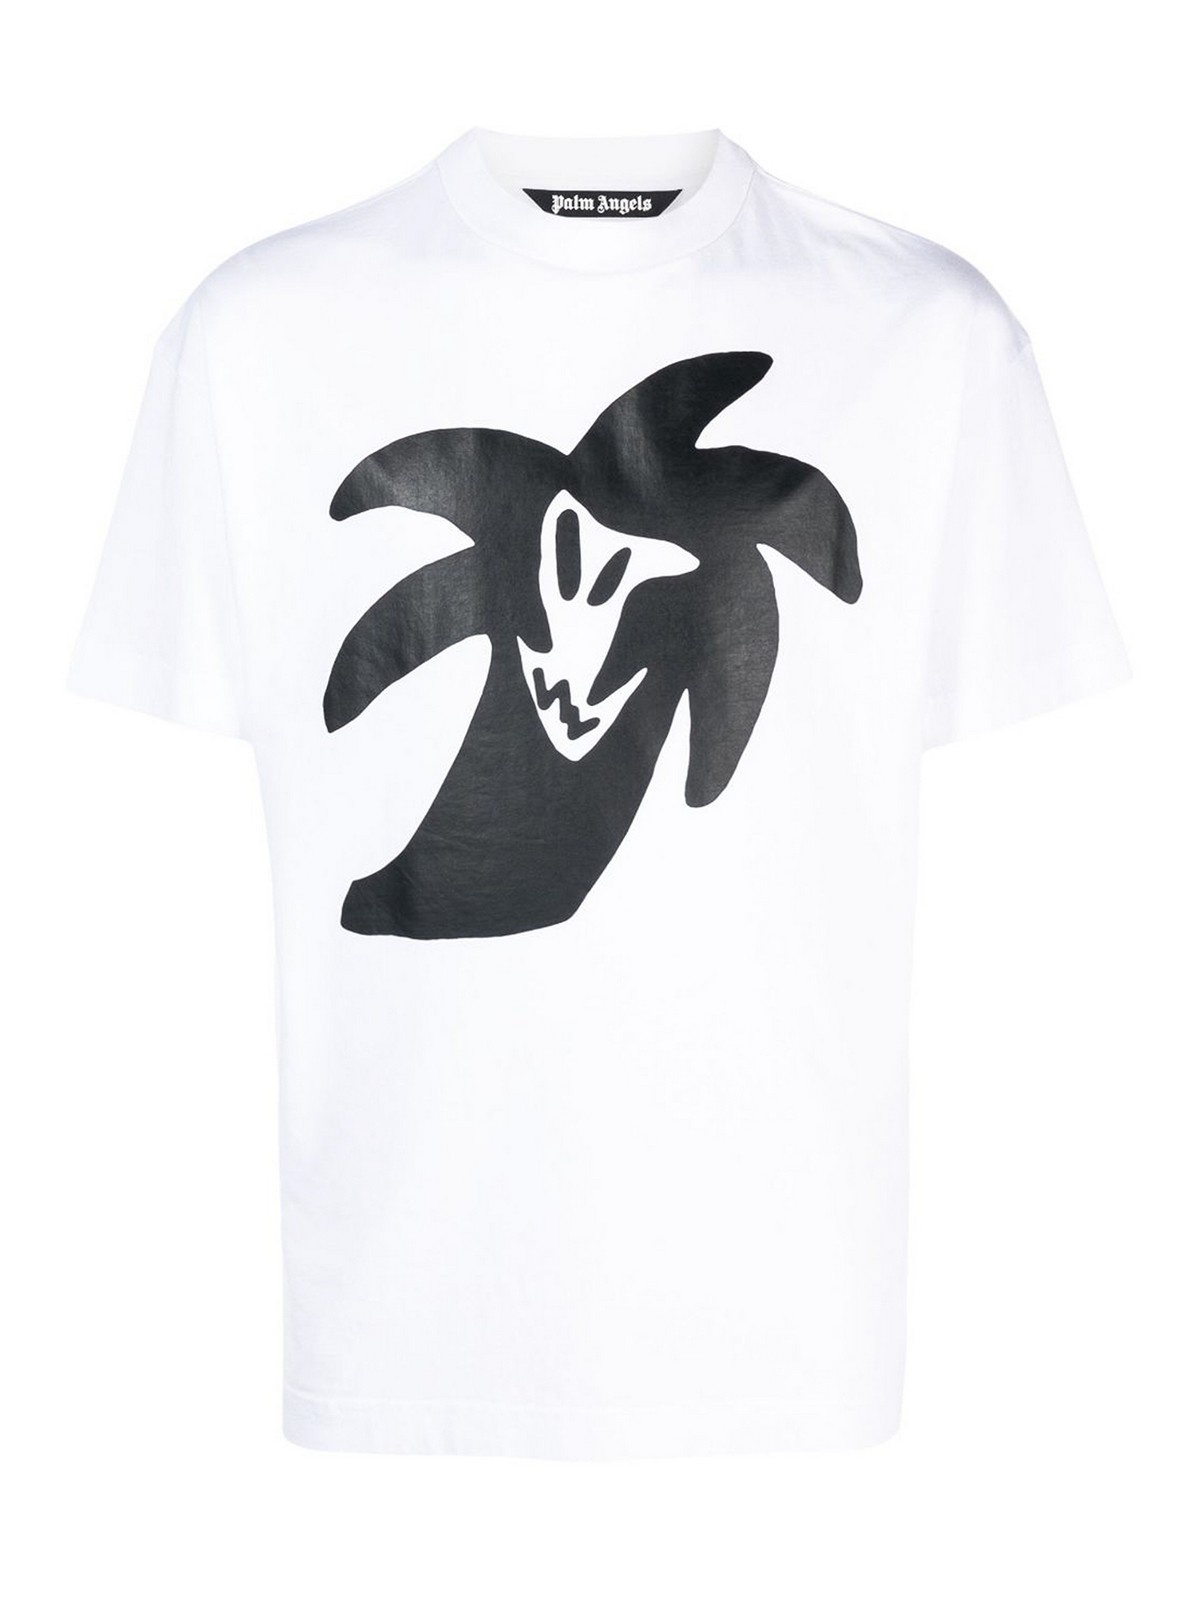 Palm Angels Logo Print T-Shirt White - S